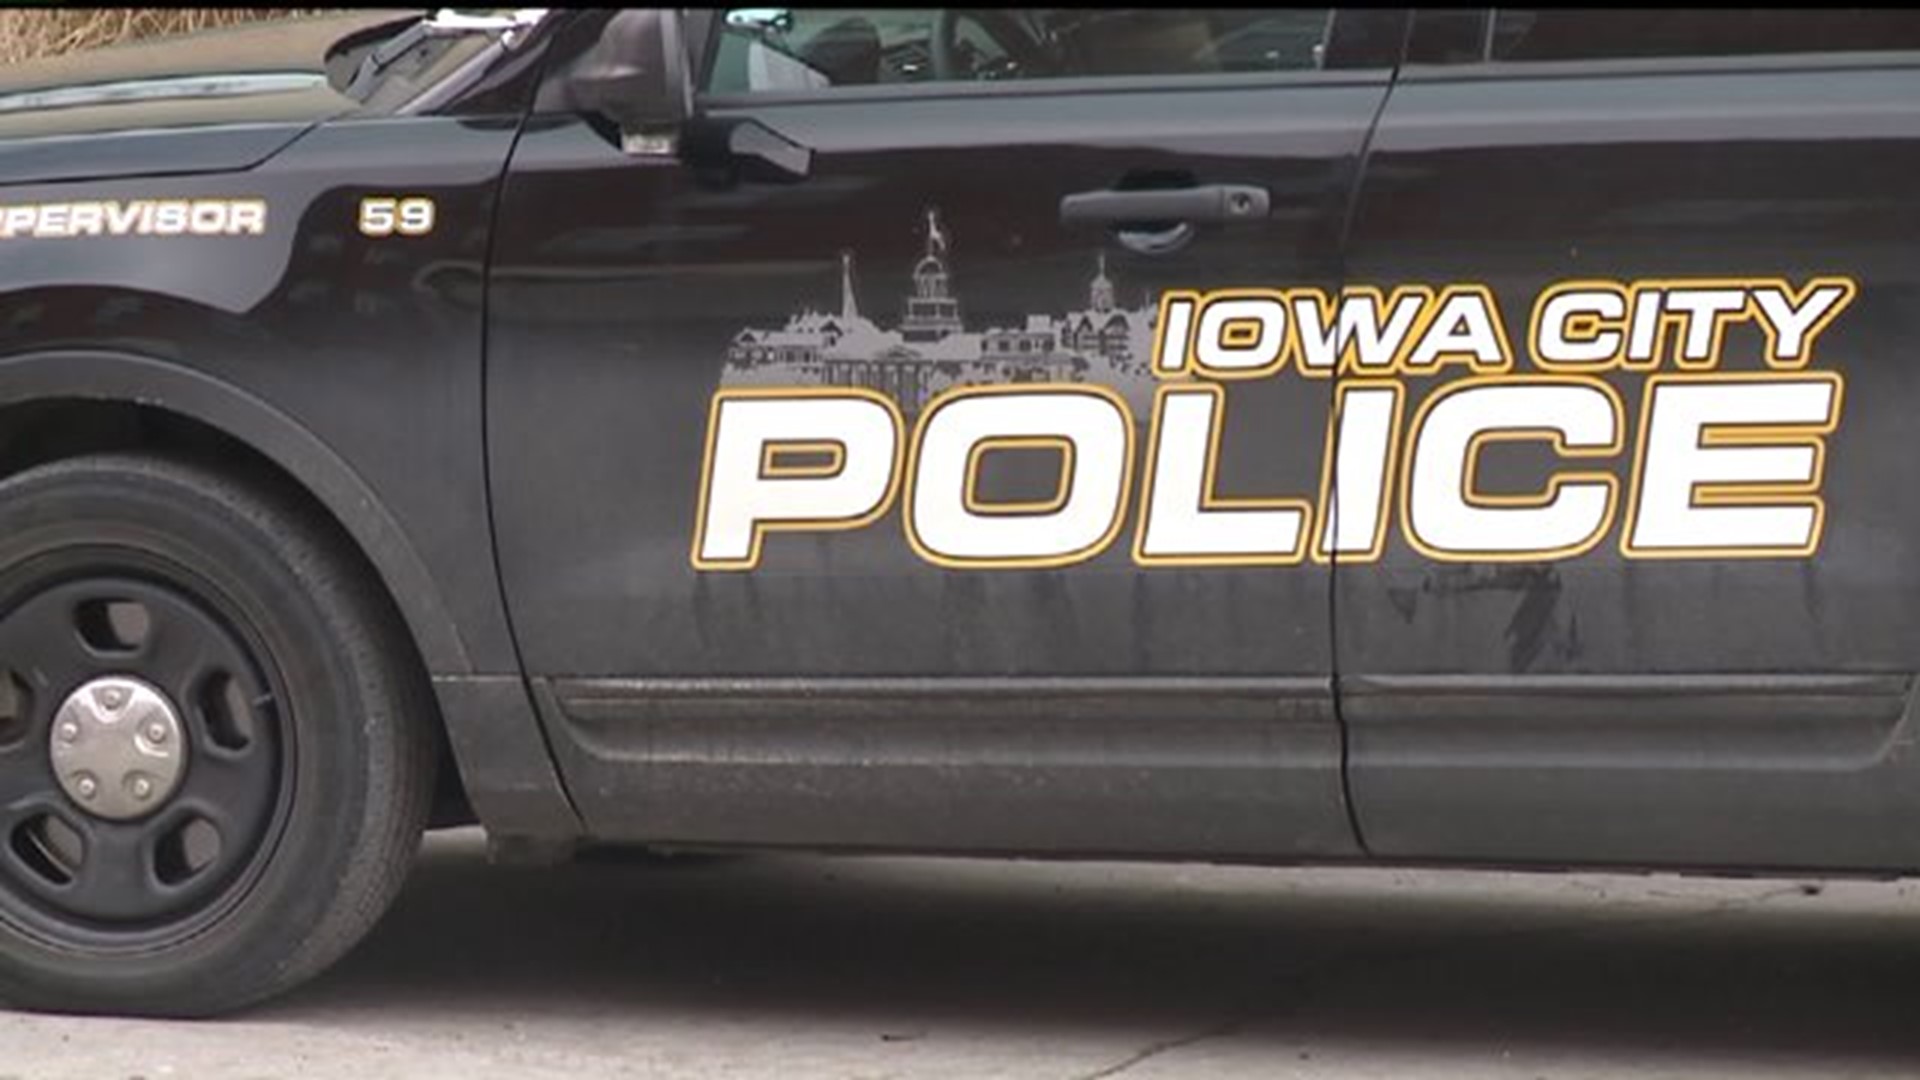 Iowa City passes immigration enforcement policy